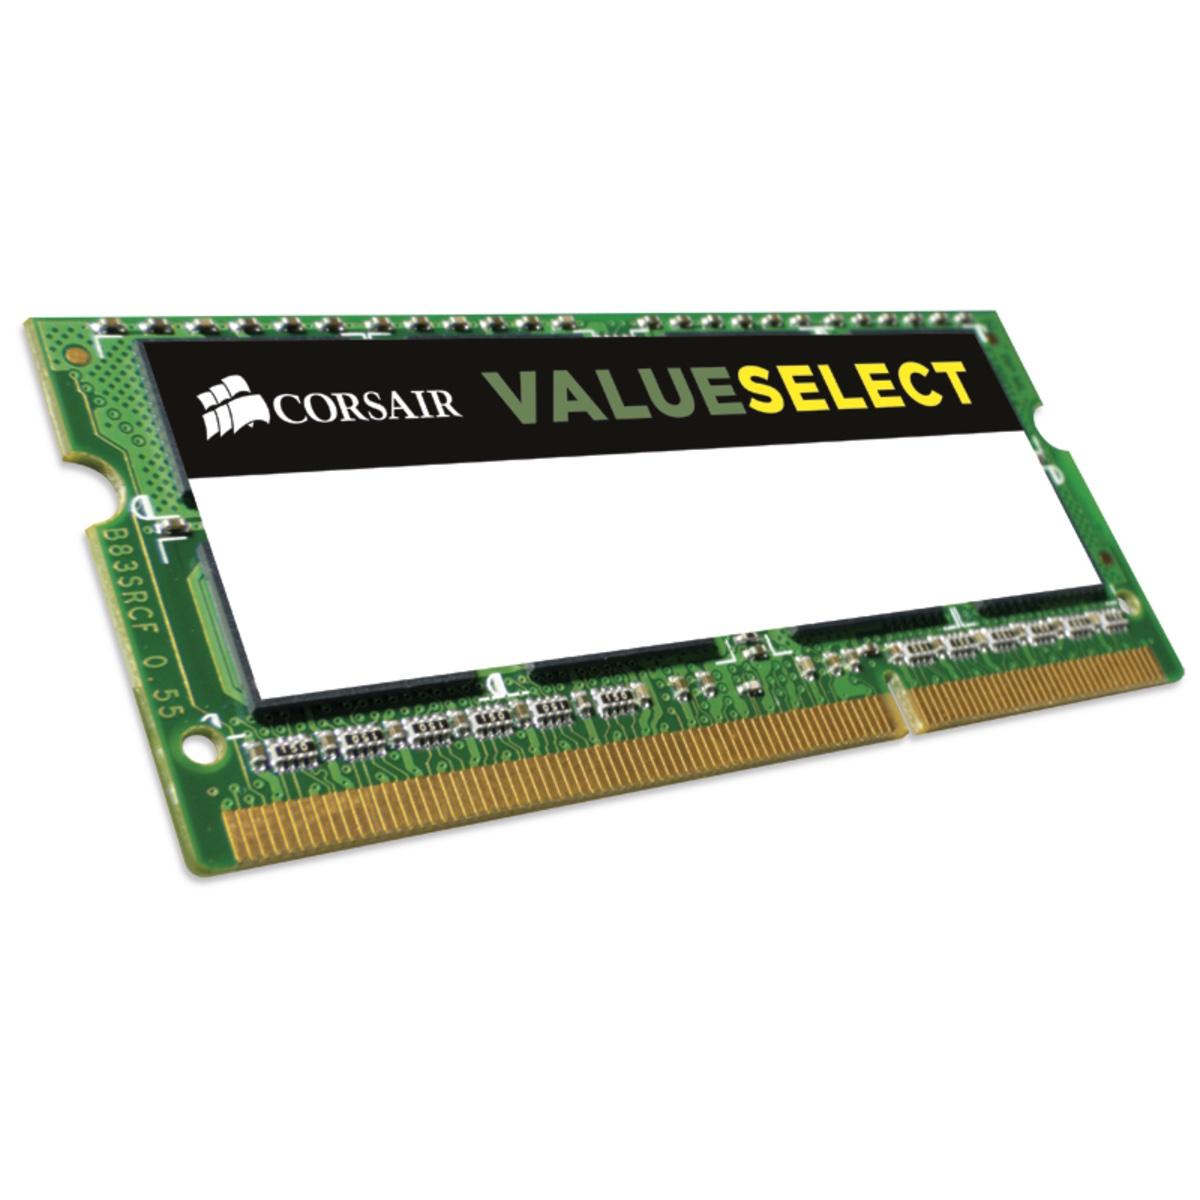 Памет Corsair DDR3L SODIMM 1600 8GB C11 1x8GB, 1.35V, Value Select, CMSO8GX3M1C1600C11